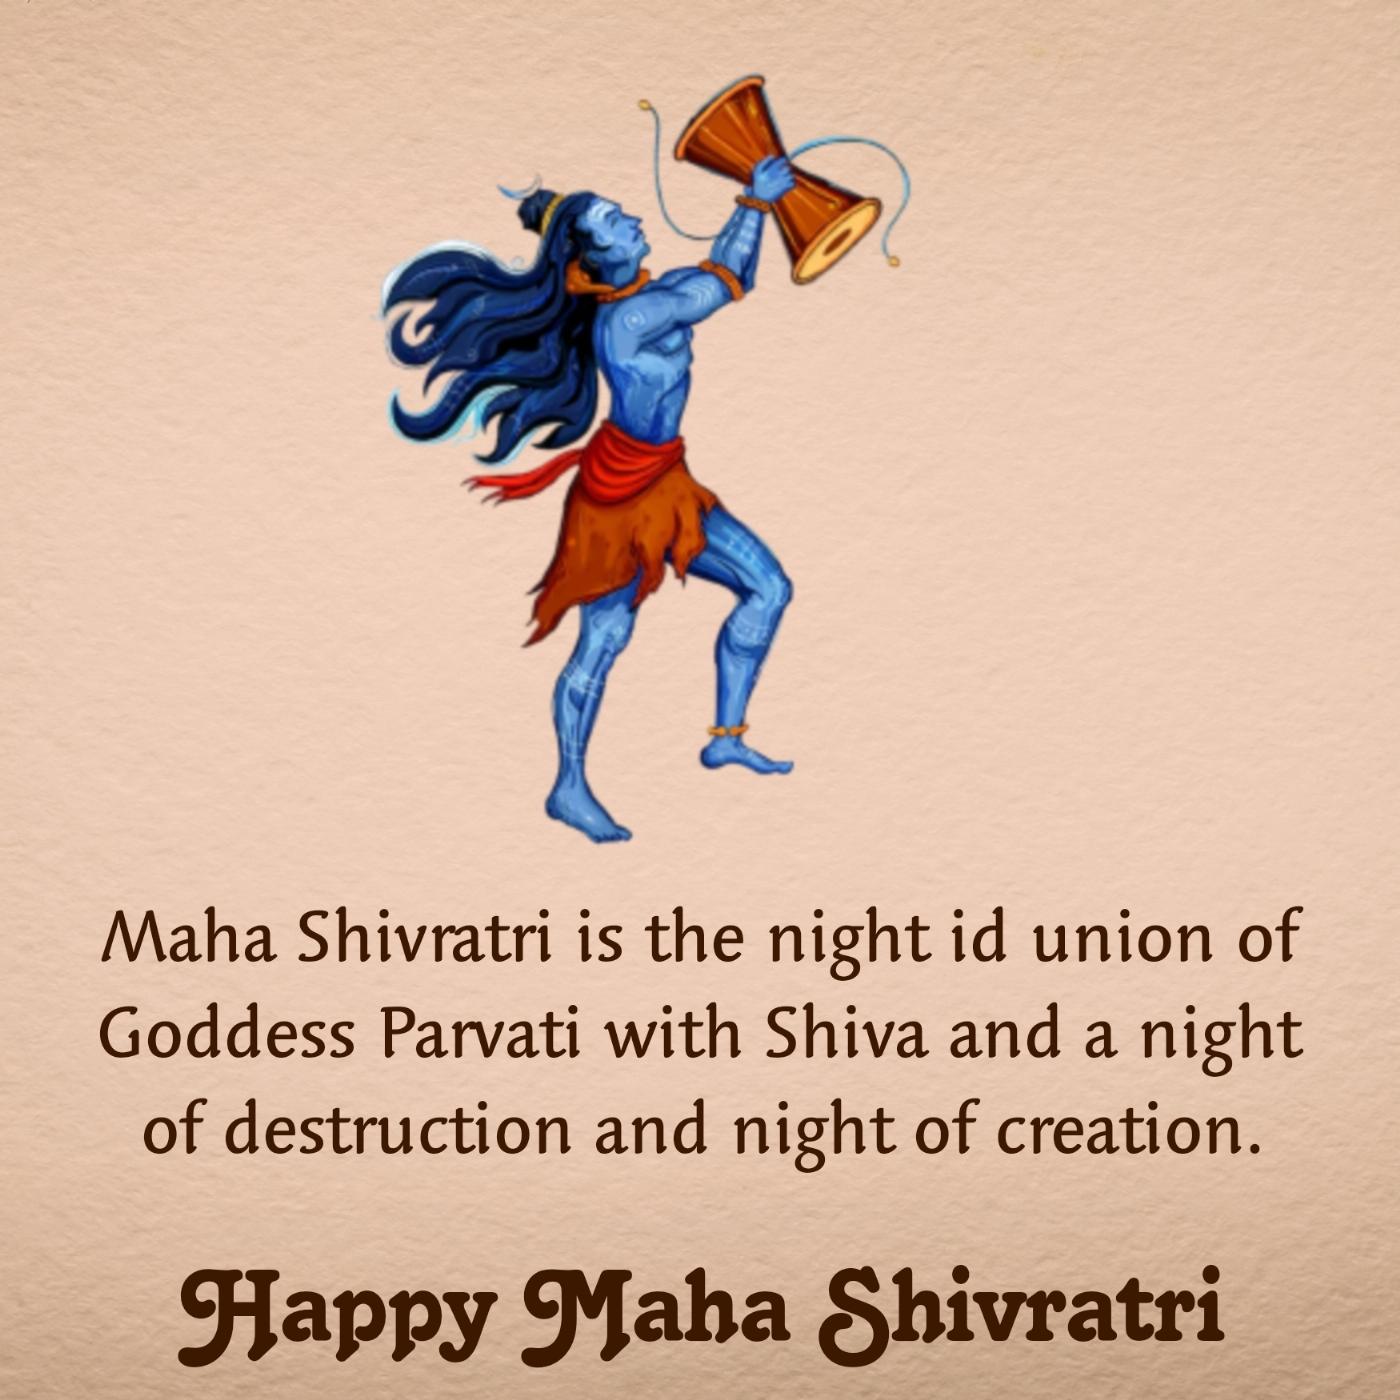 Maha Shivratri is the night id union of Goddess Parvati with Shiva